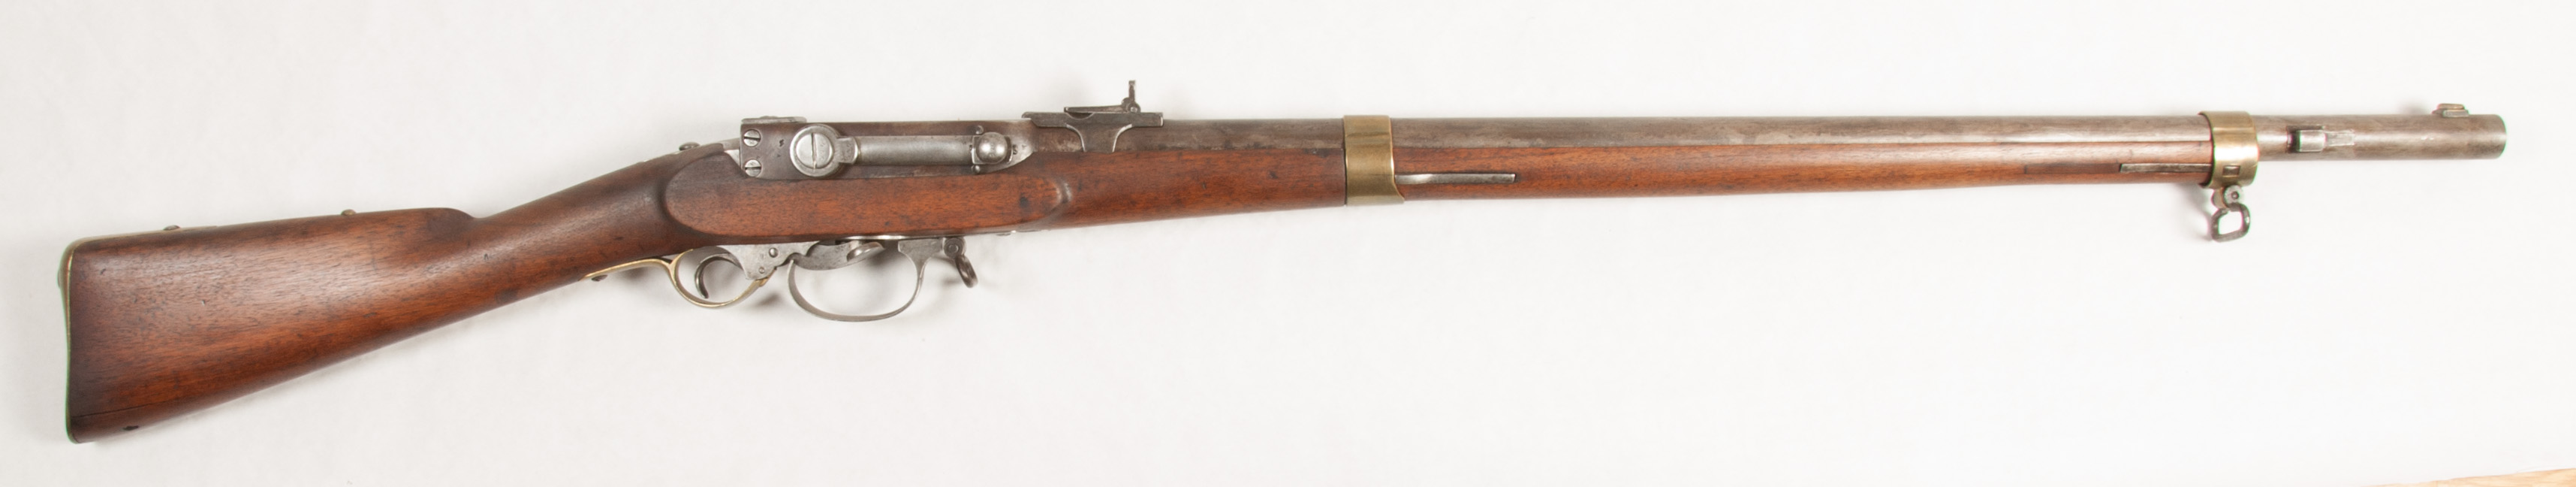 ./guns/rifle/bilder/Rifle-Kongsberg-Kammerlader-M1846-55-59-456-1.jpg